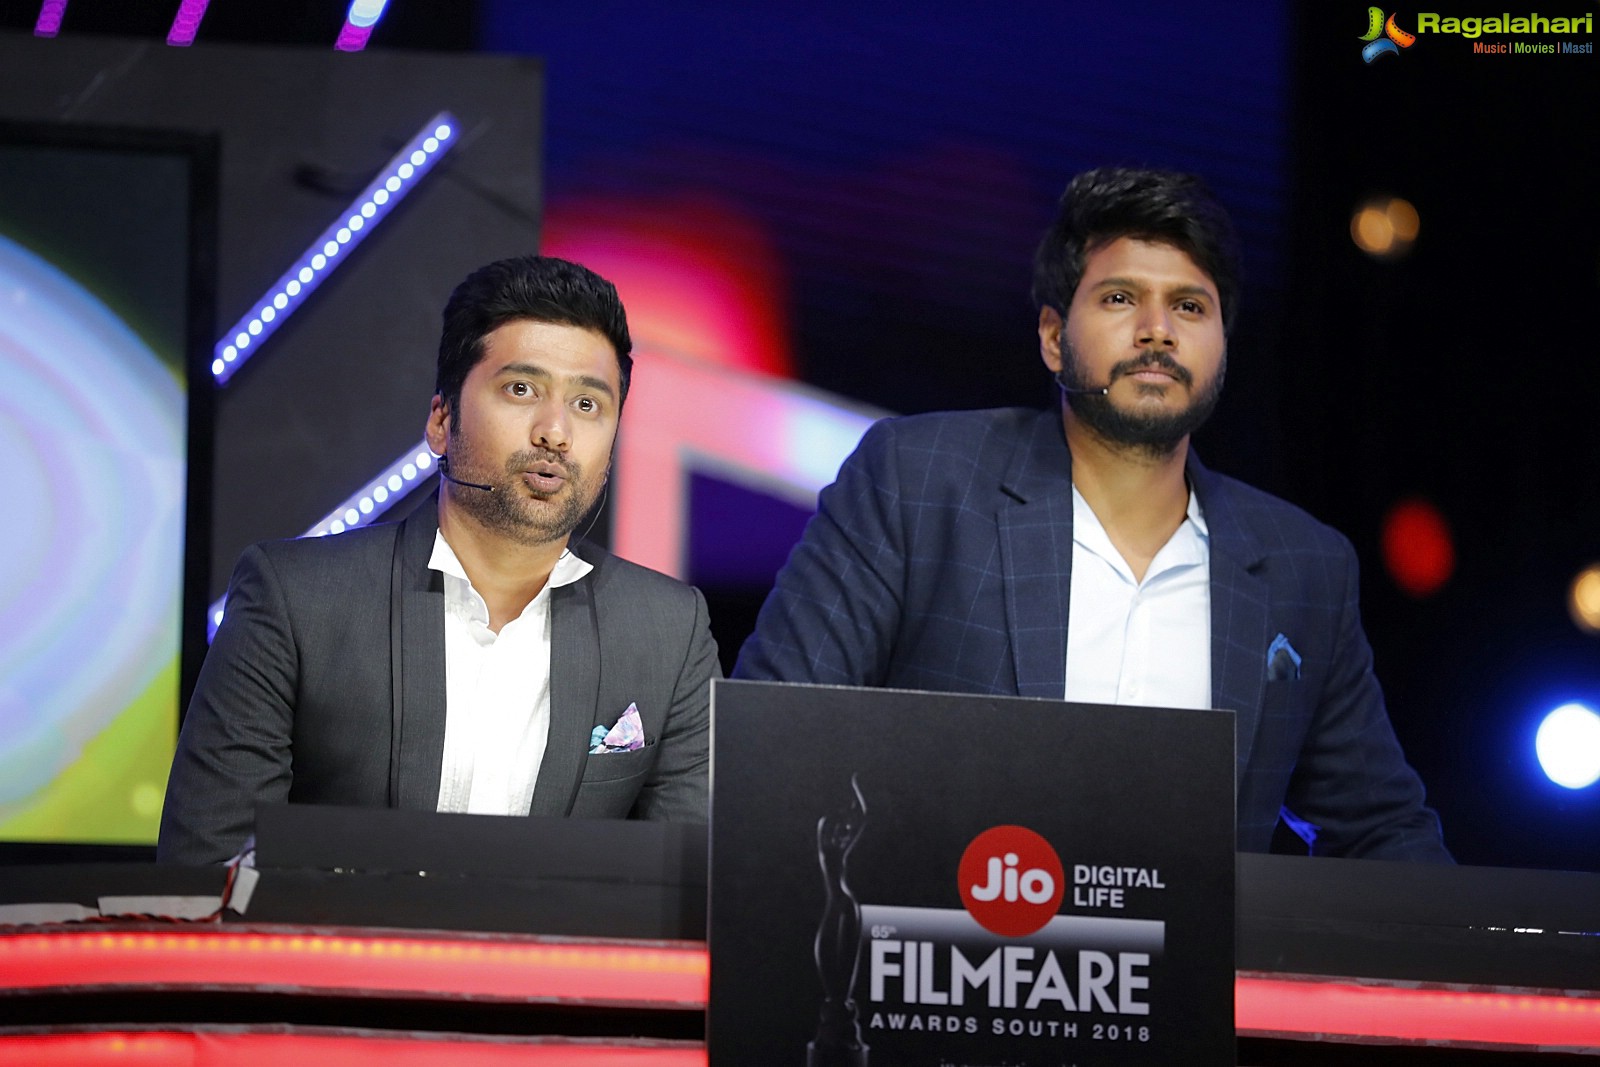 Inside 65th Jio Filmfare Awards South 2018